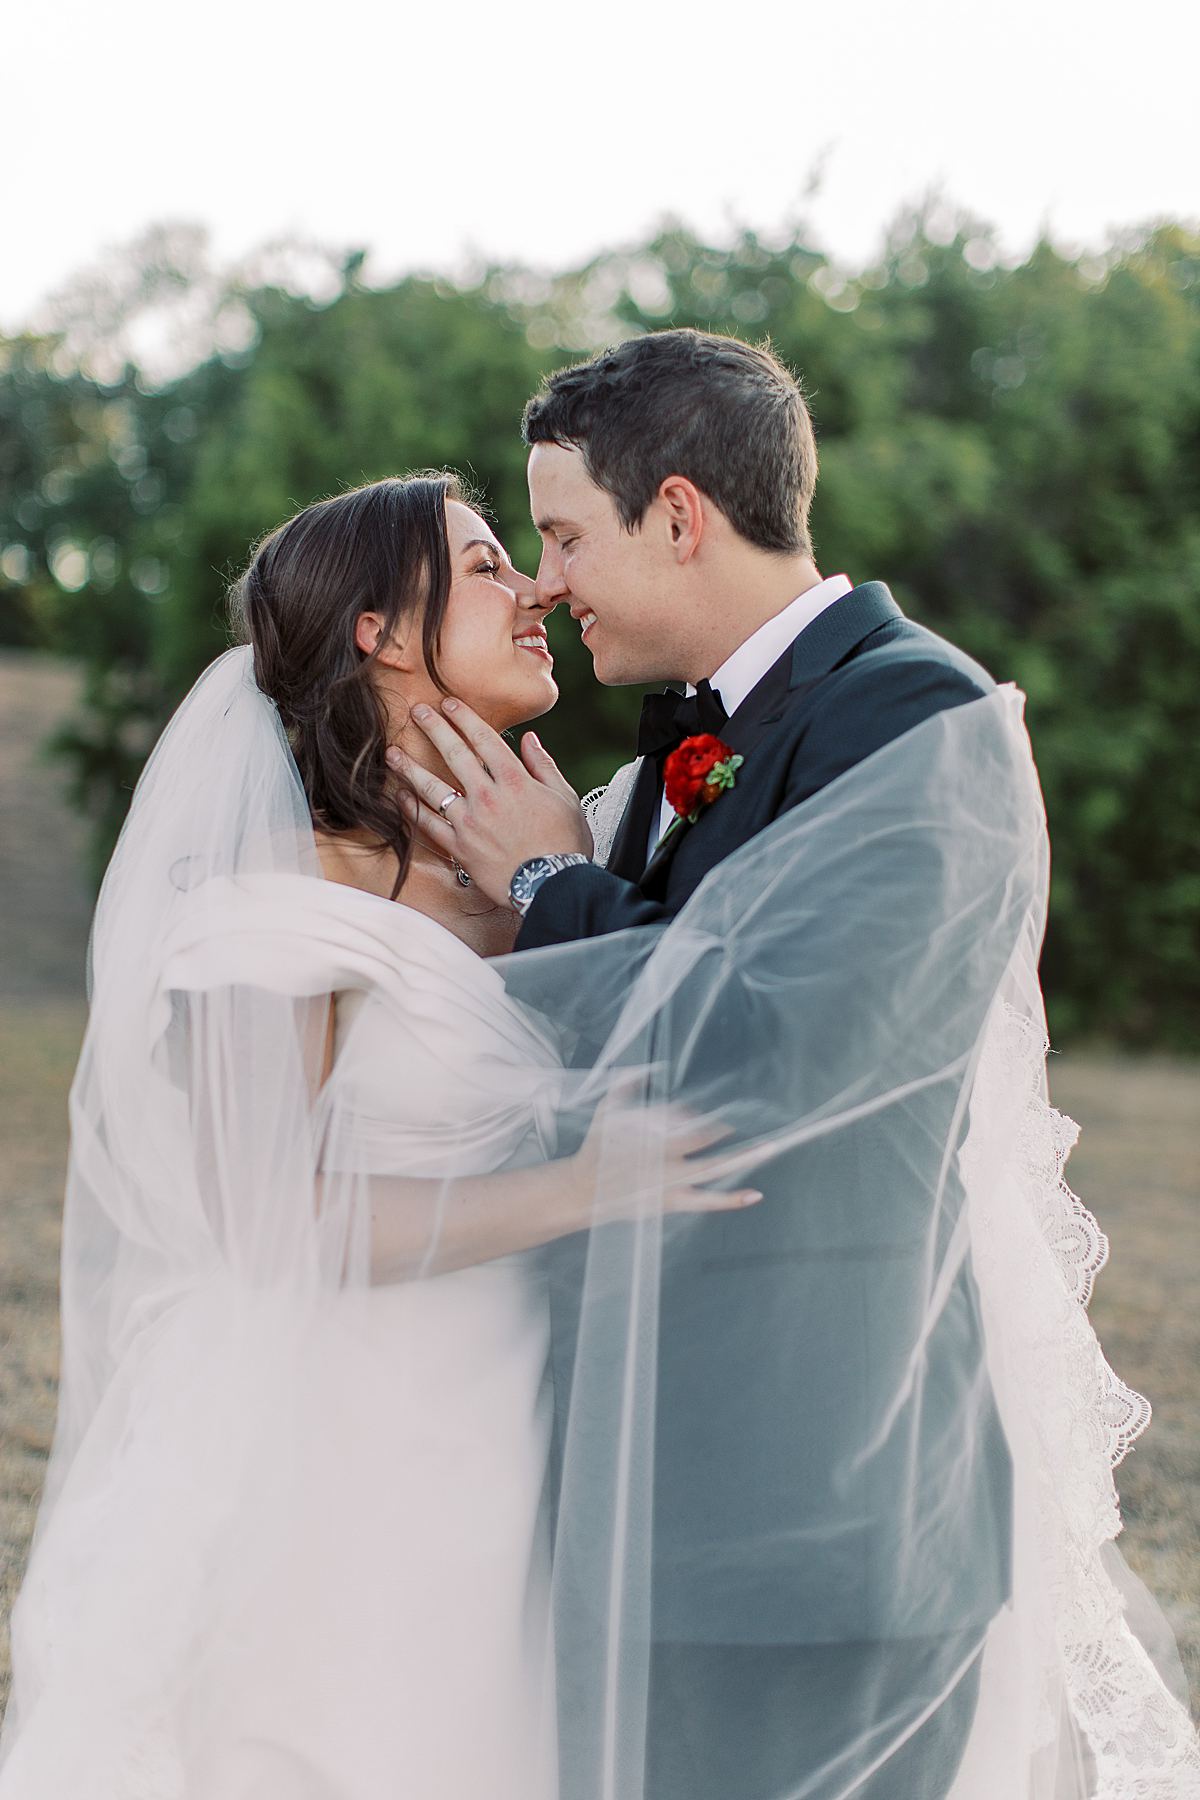 Bride and Groom Veil Photo, Film Photos, Wedding Photos